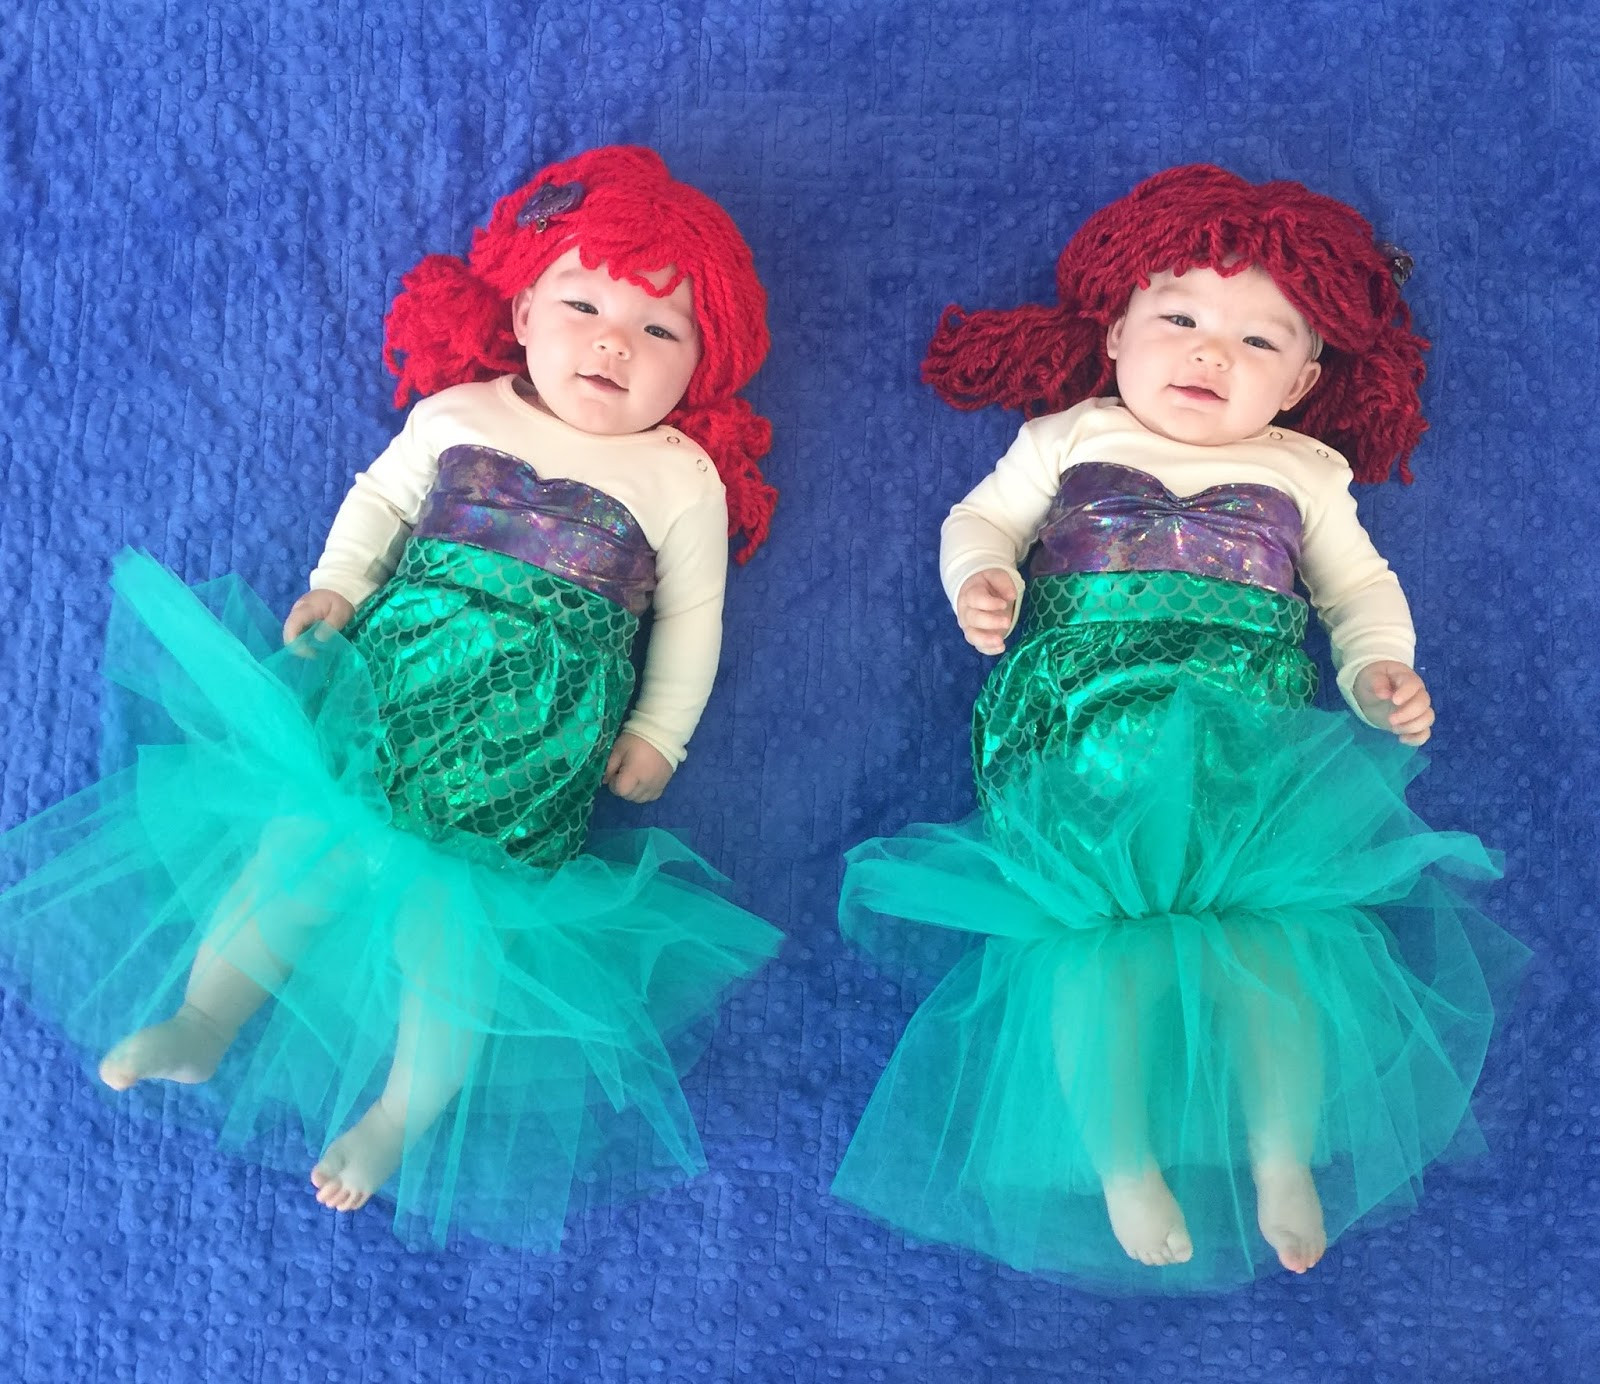 DIY Little Mermaid Costumes
 Lo Ray & Me The Little Mermaids DIY Halloween Costumes